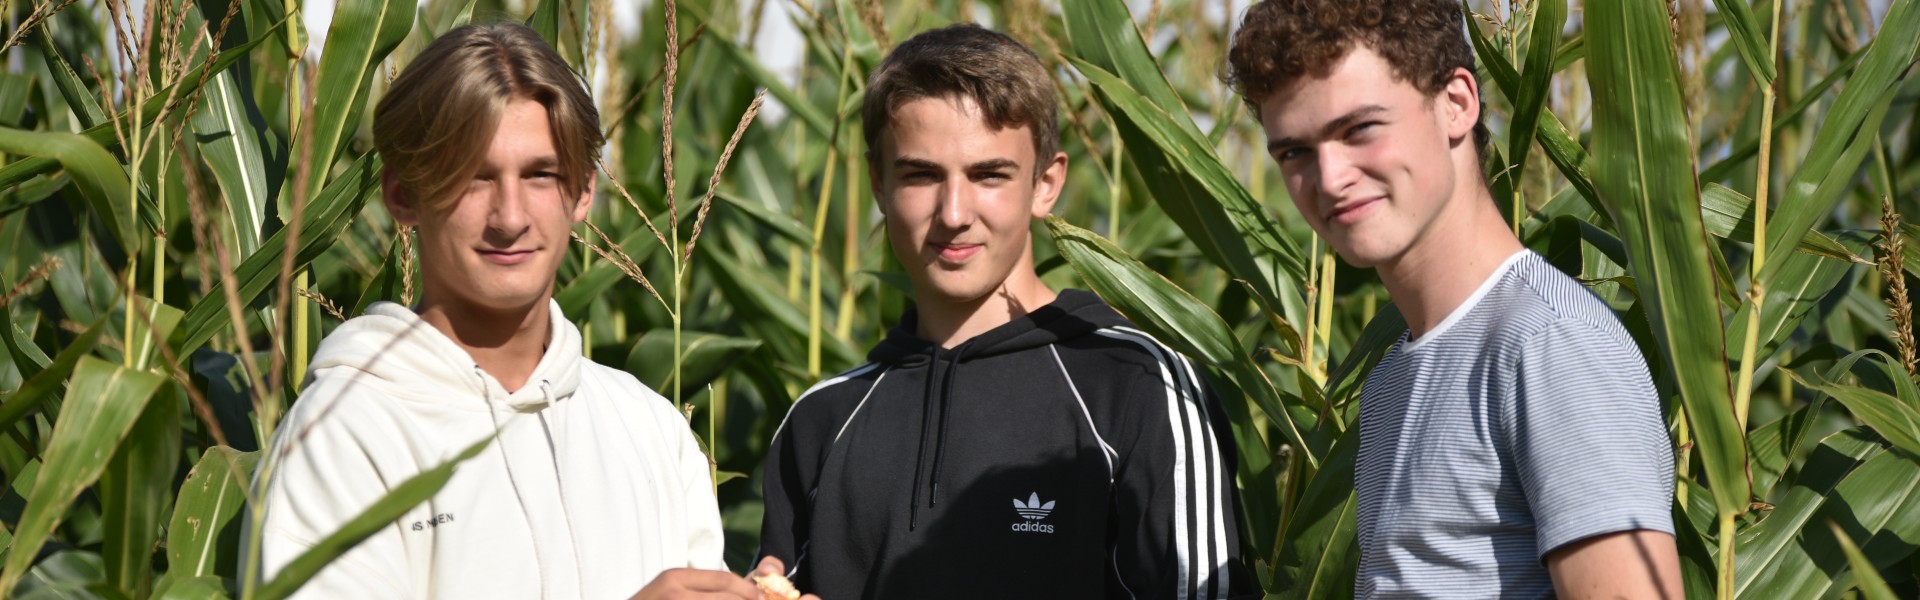 EUX-elever i majsmark